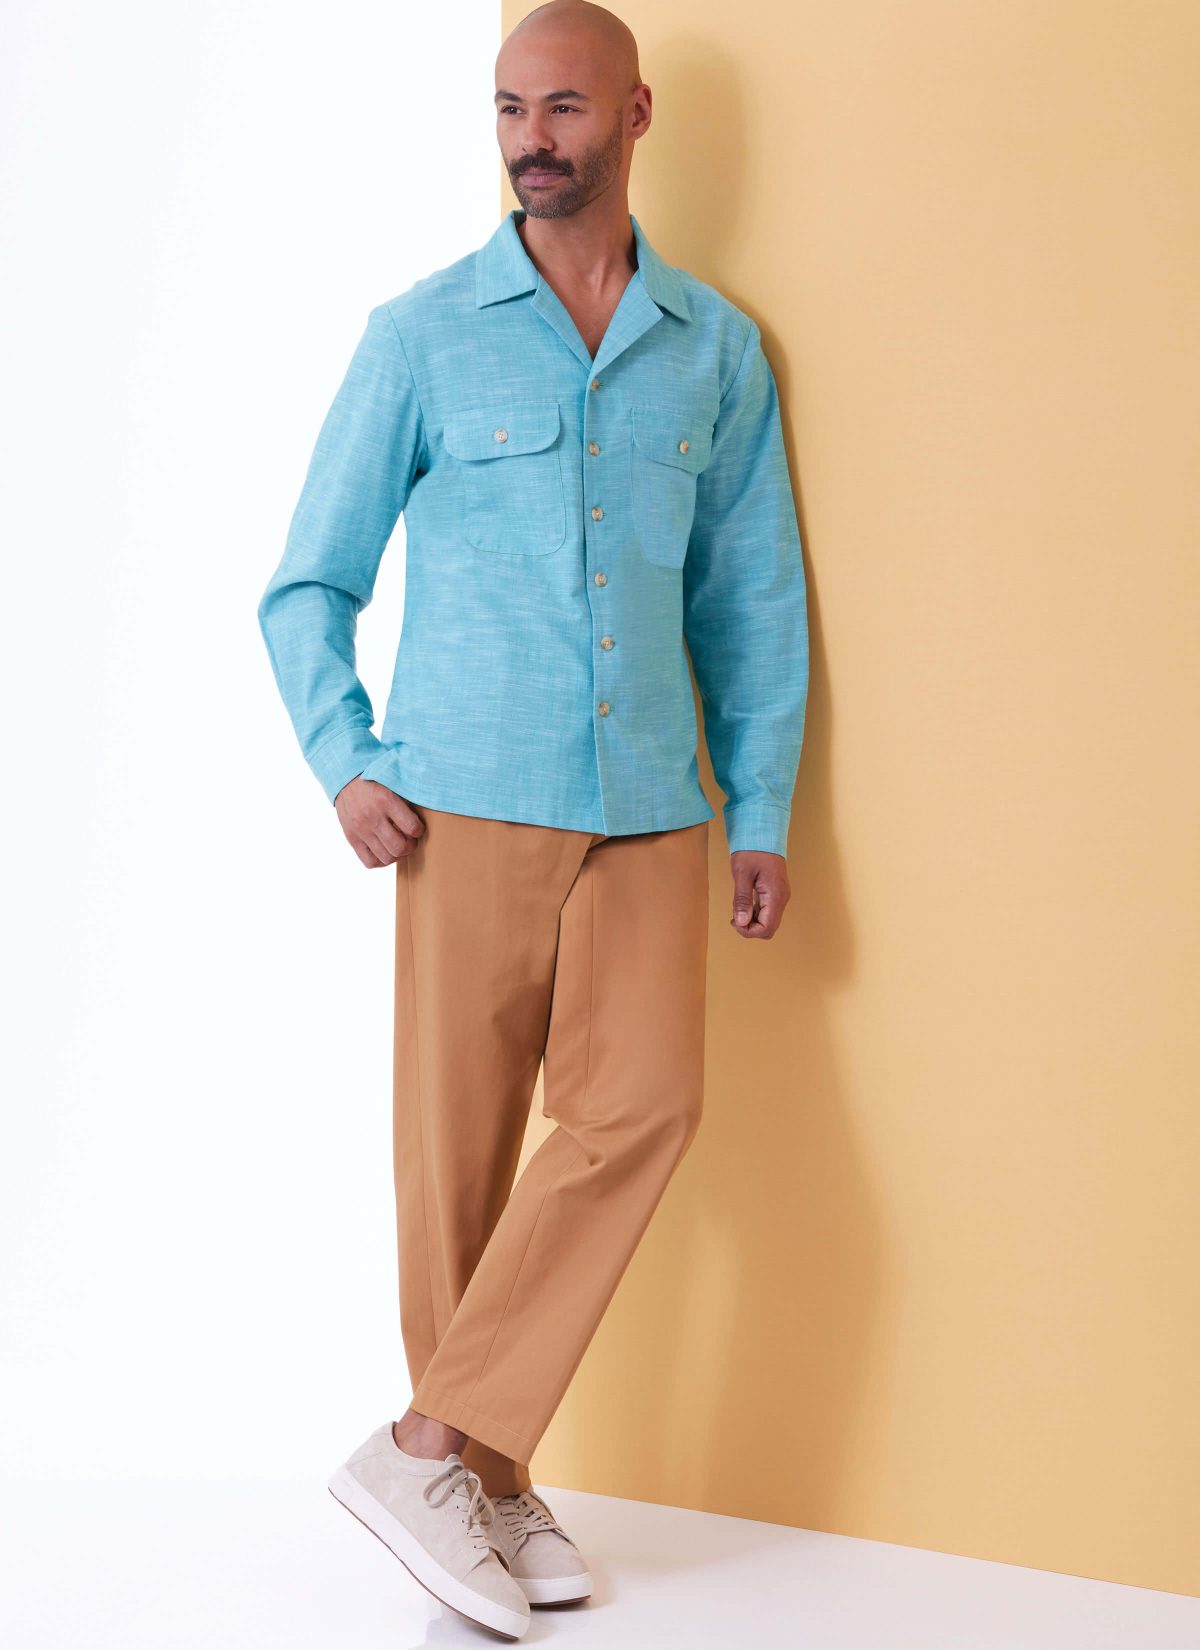 Butterick Sewing Pattern B6984 Unisex Shirts, Shorts and Trousers